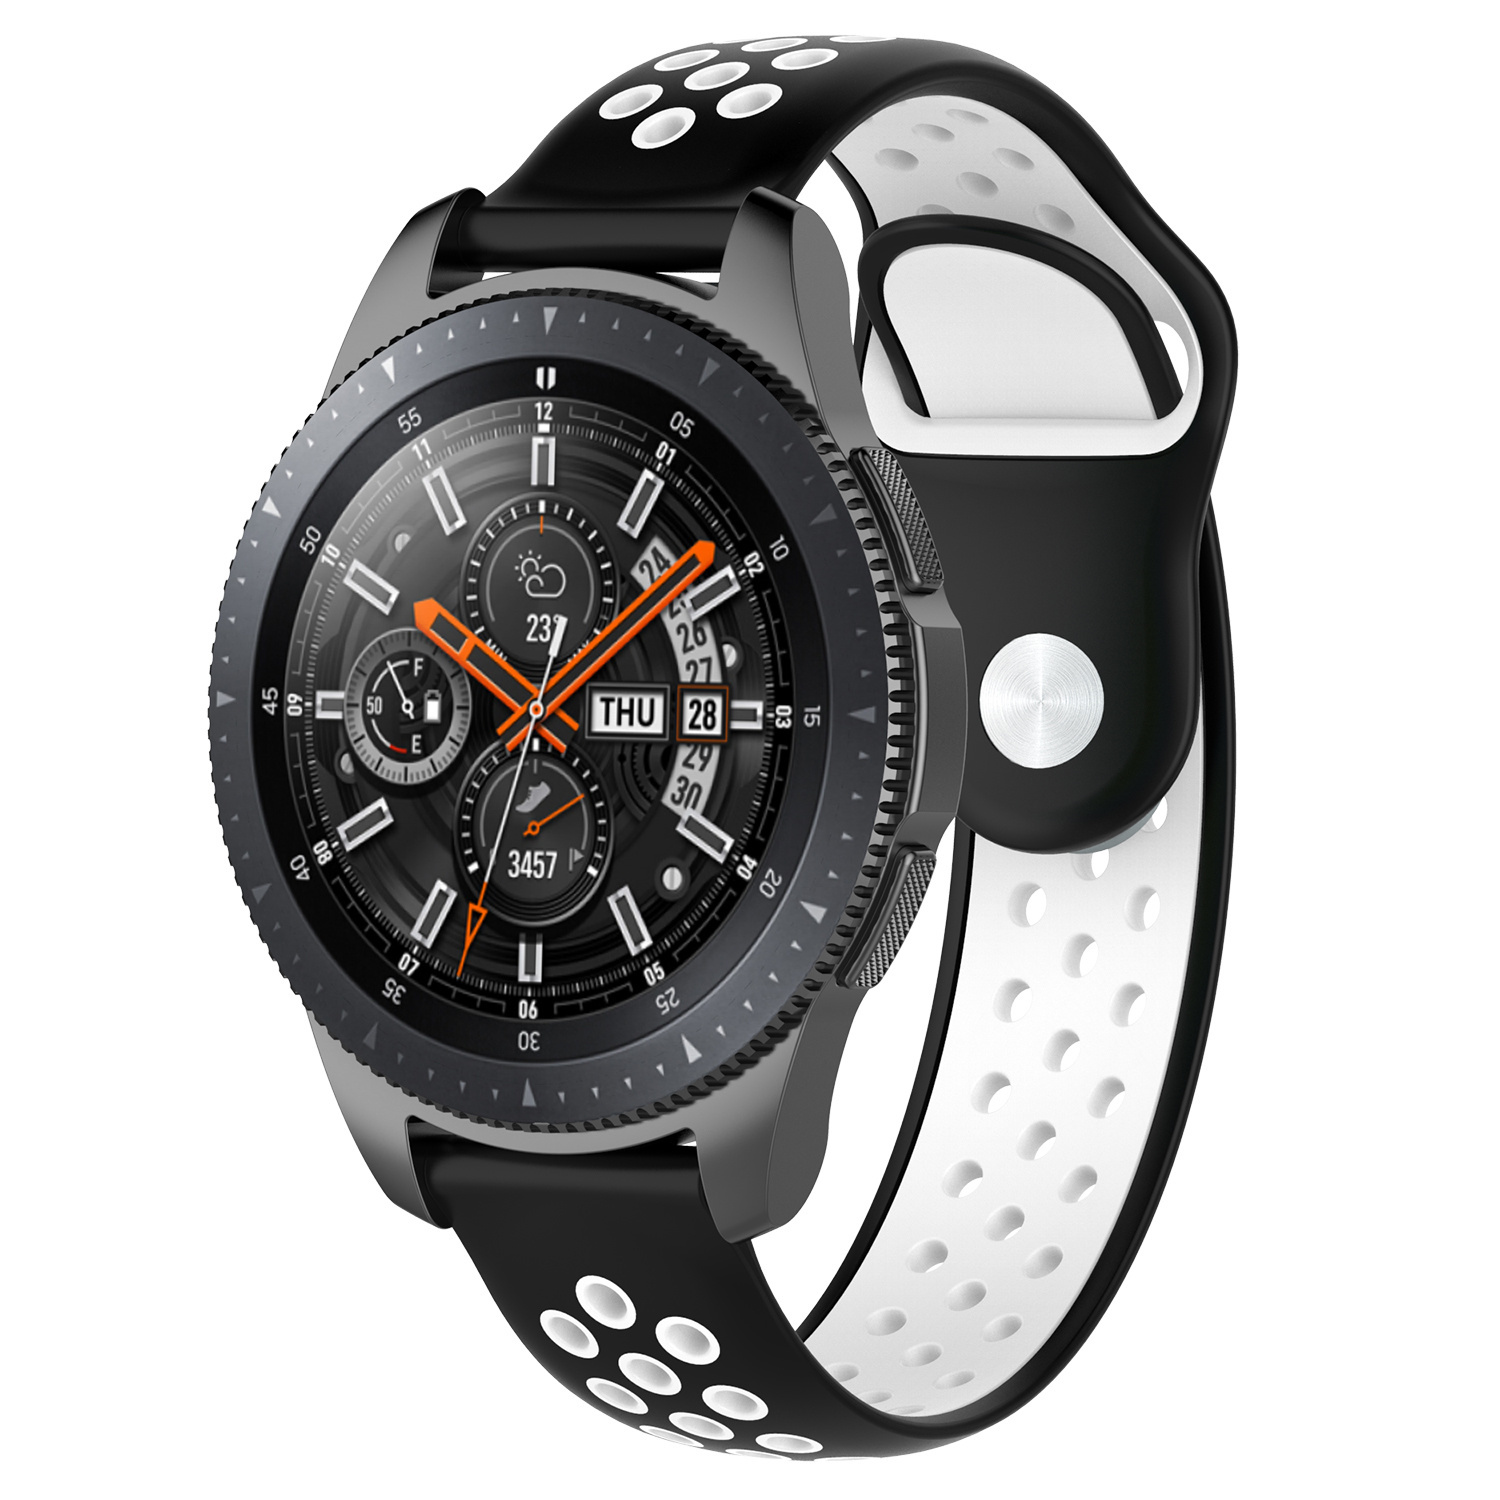 Samsung Galaxy Watch Double Sport Strap - Black White